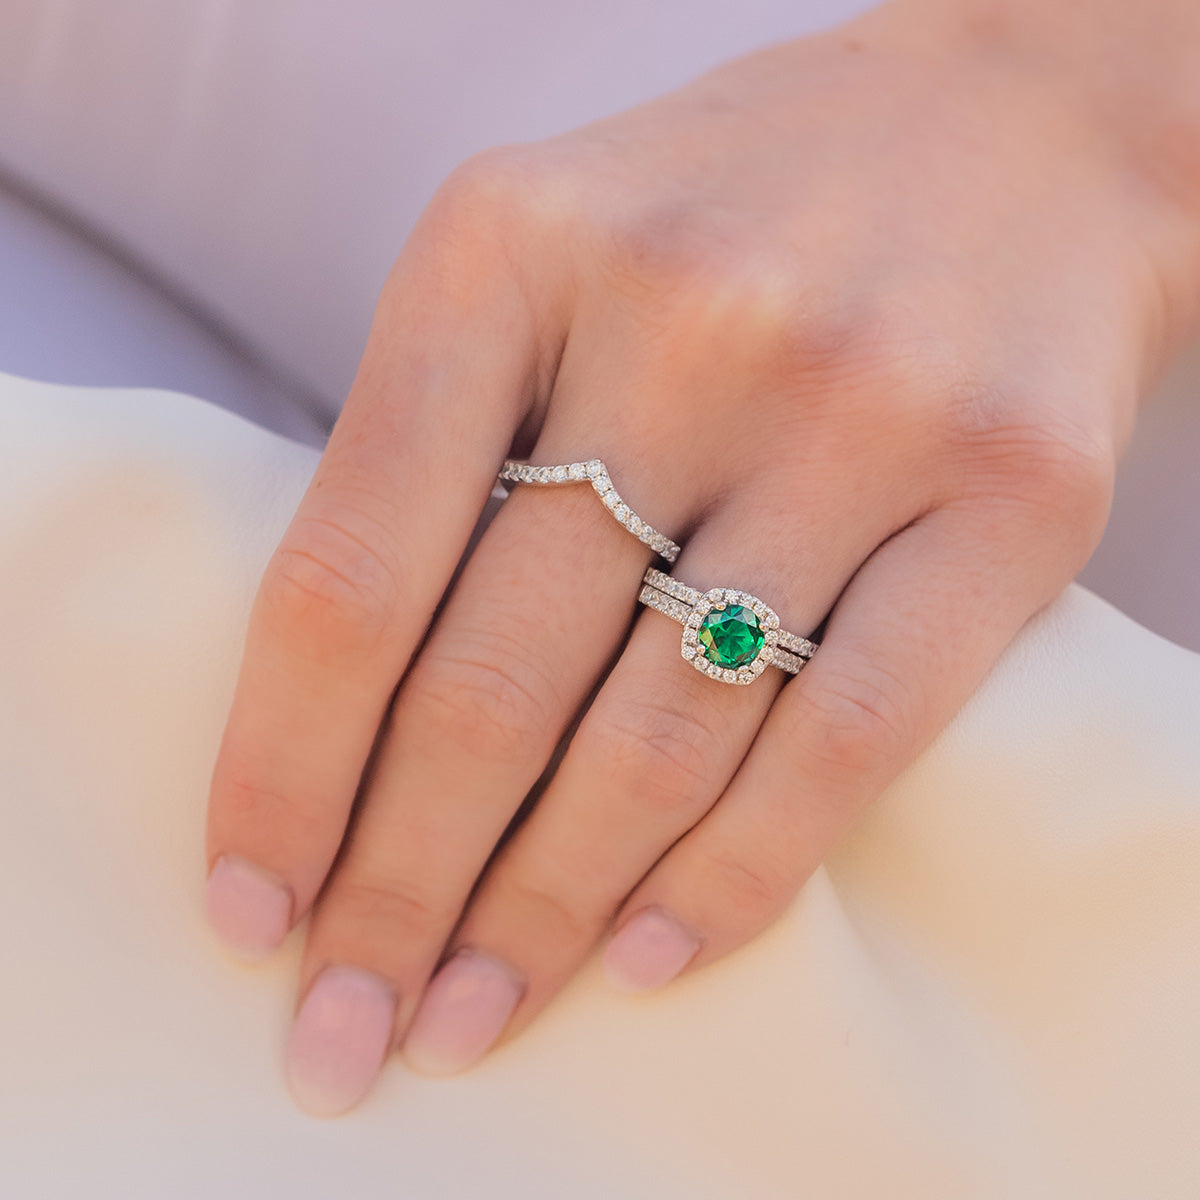 girls hand with emerald wedding ring